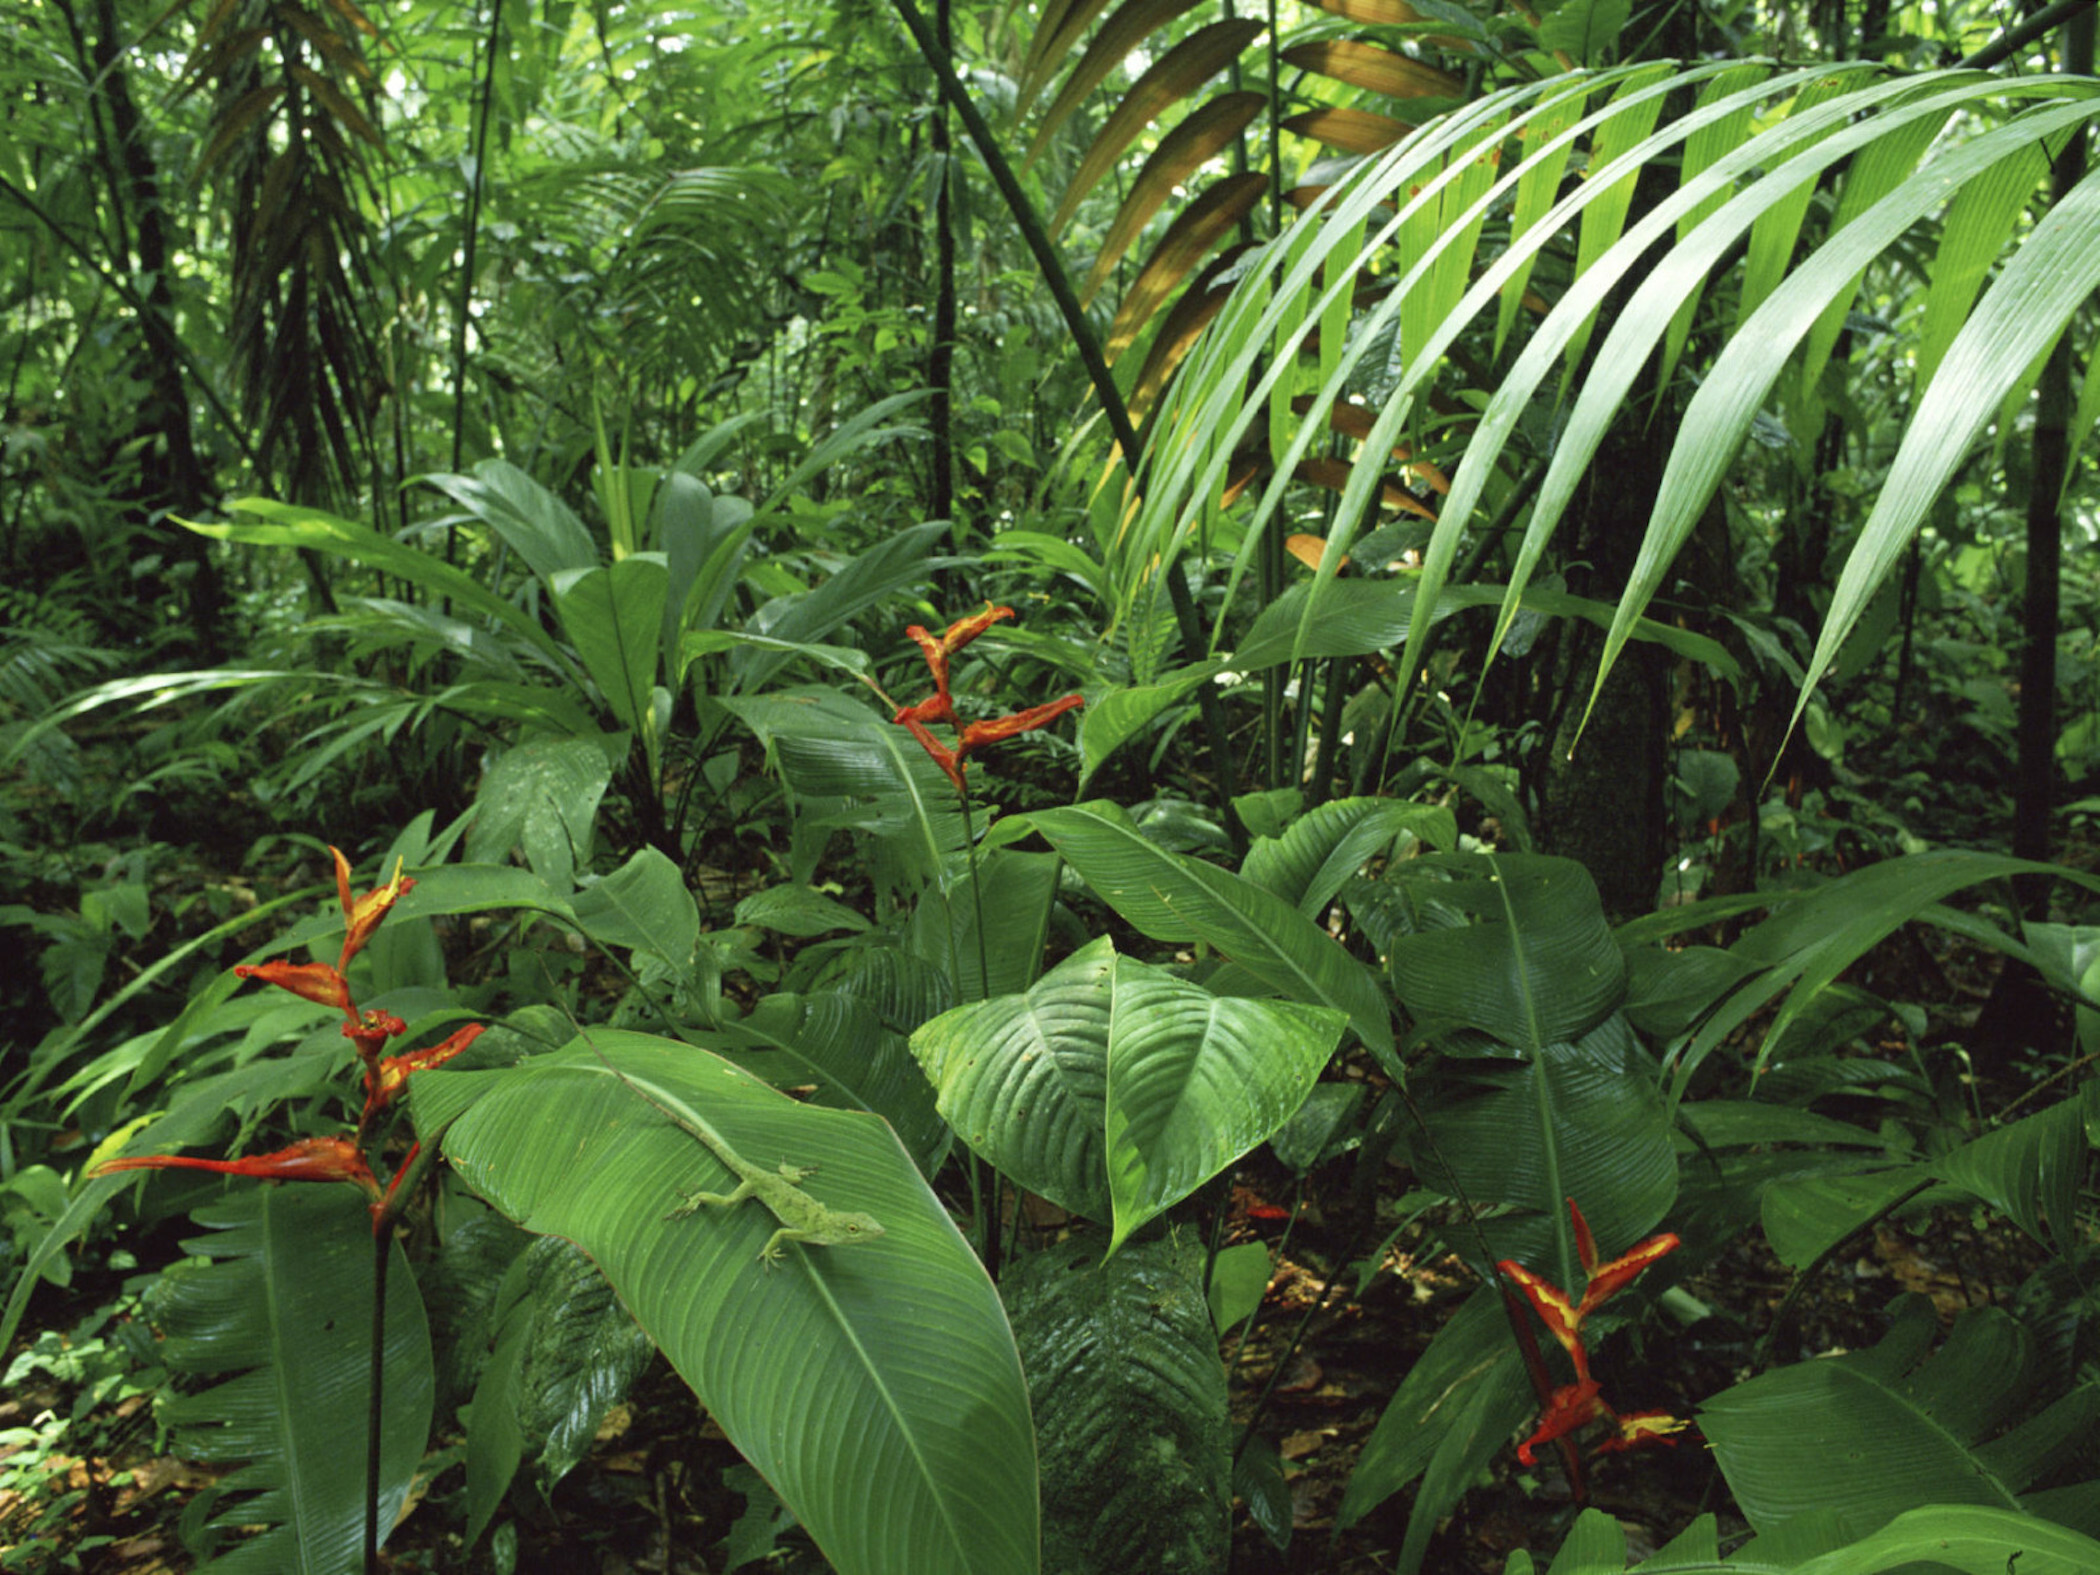 Rainforest: Costa Rica, Tropical woodlands exhibit high levels of biodiversity. 2100x1580 HD Wallpaper.